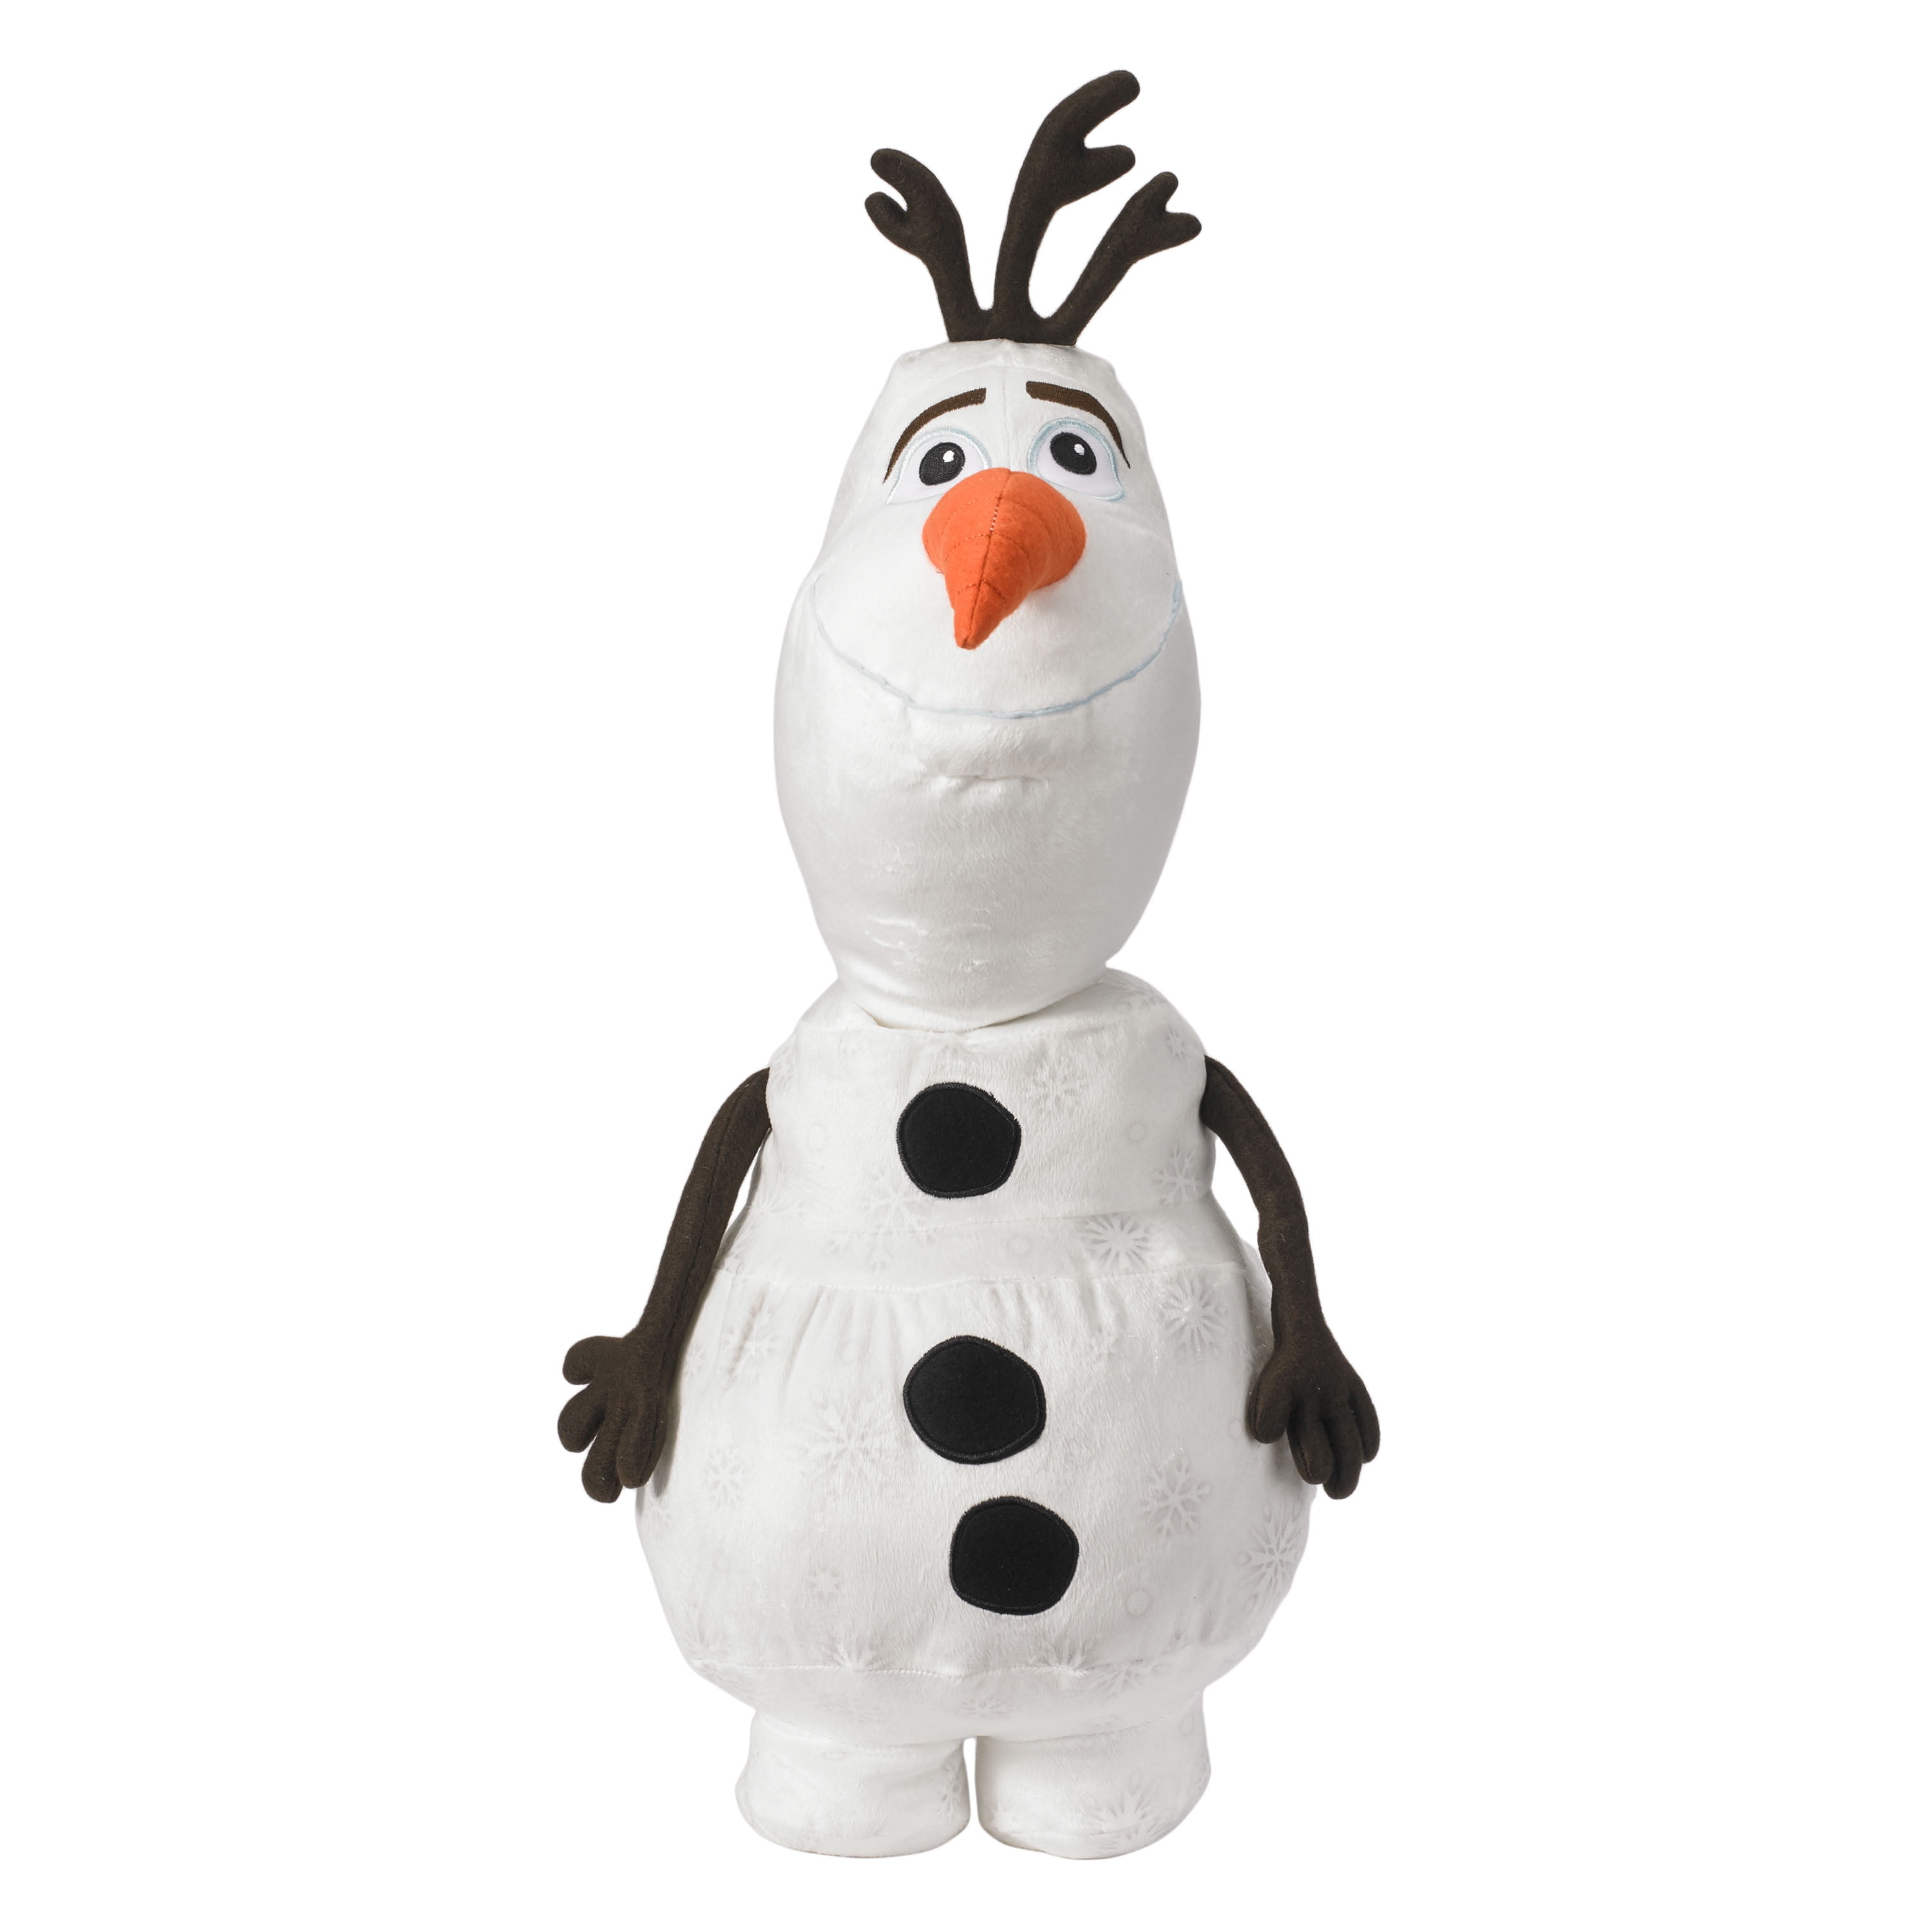 Pillow Pets Disney's Frozen 2 Olaf Stuffed Animal Plush Toy